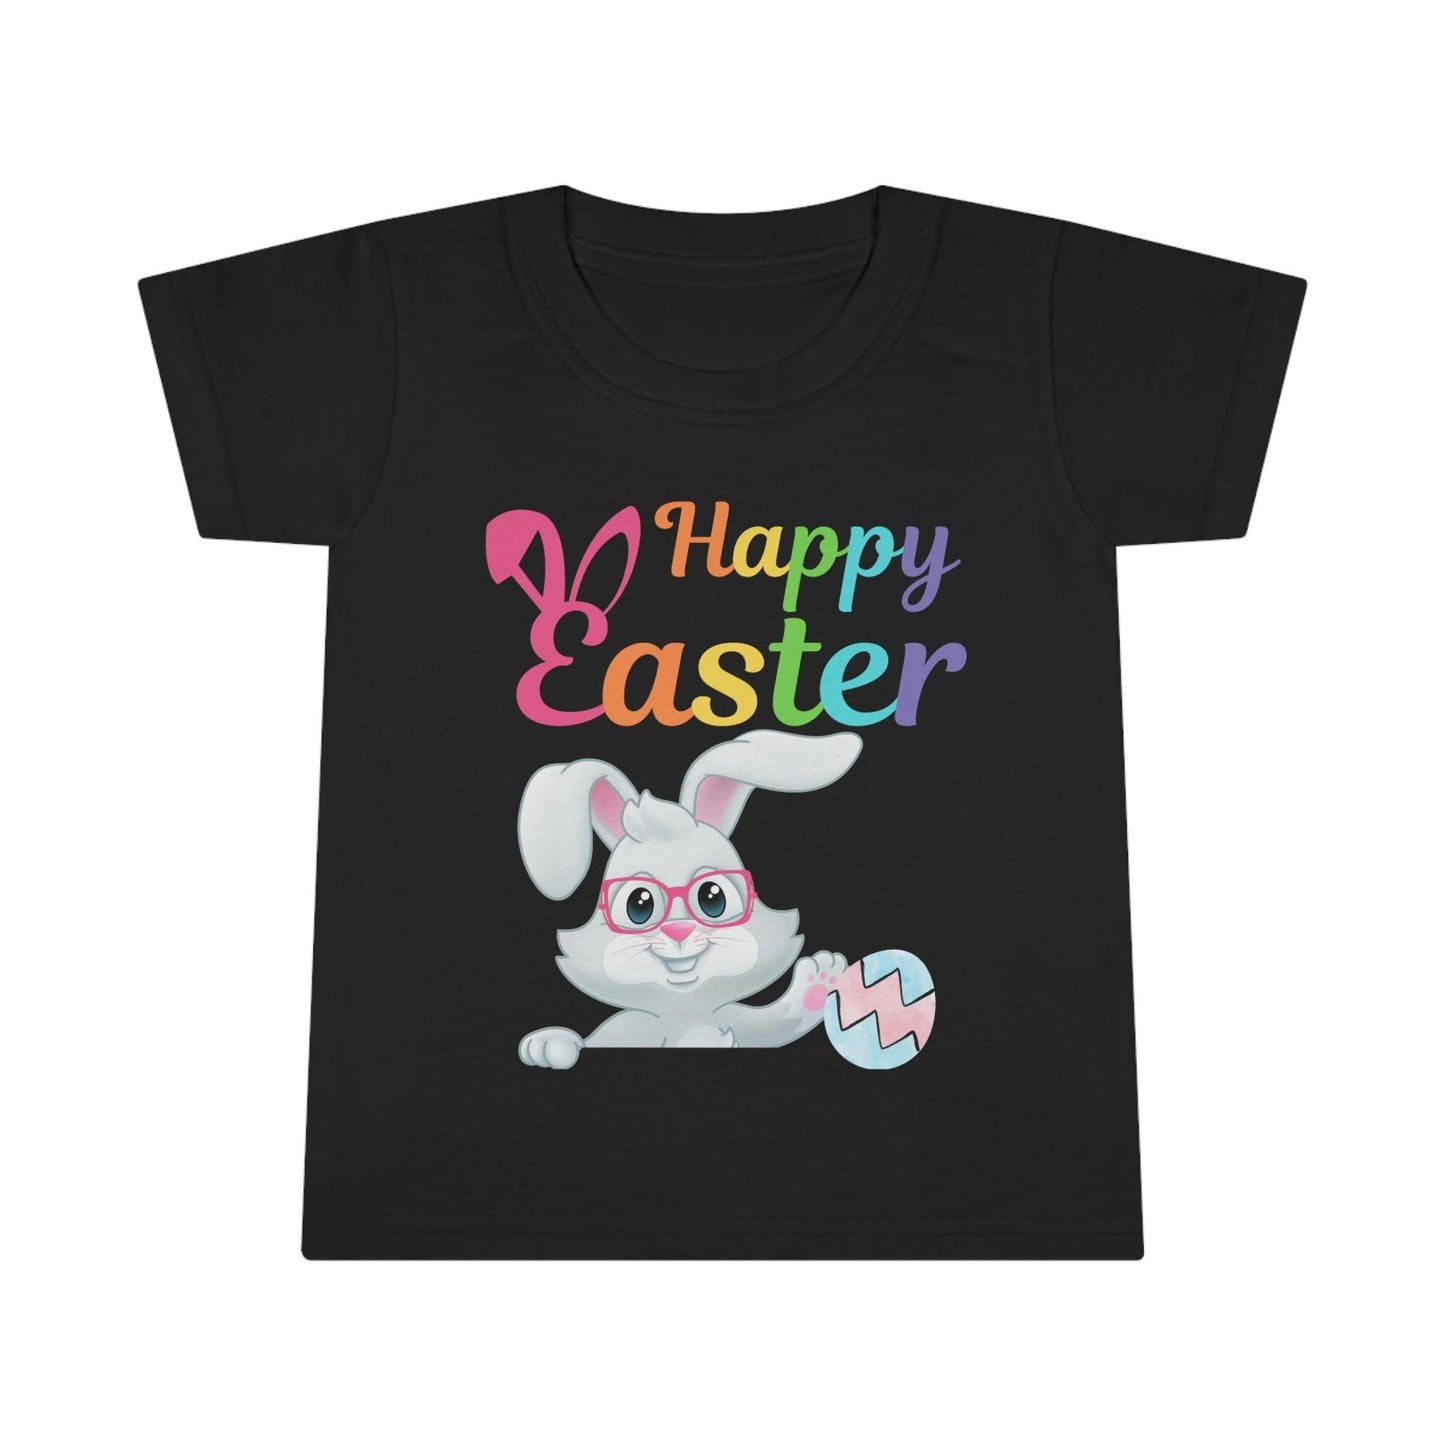 Happy Easter shirt Toddler T-shirt